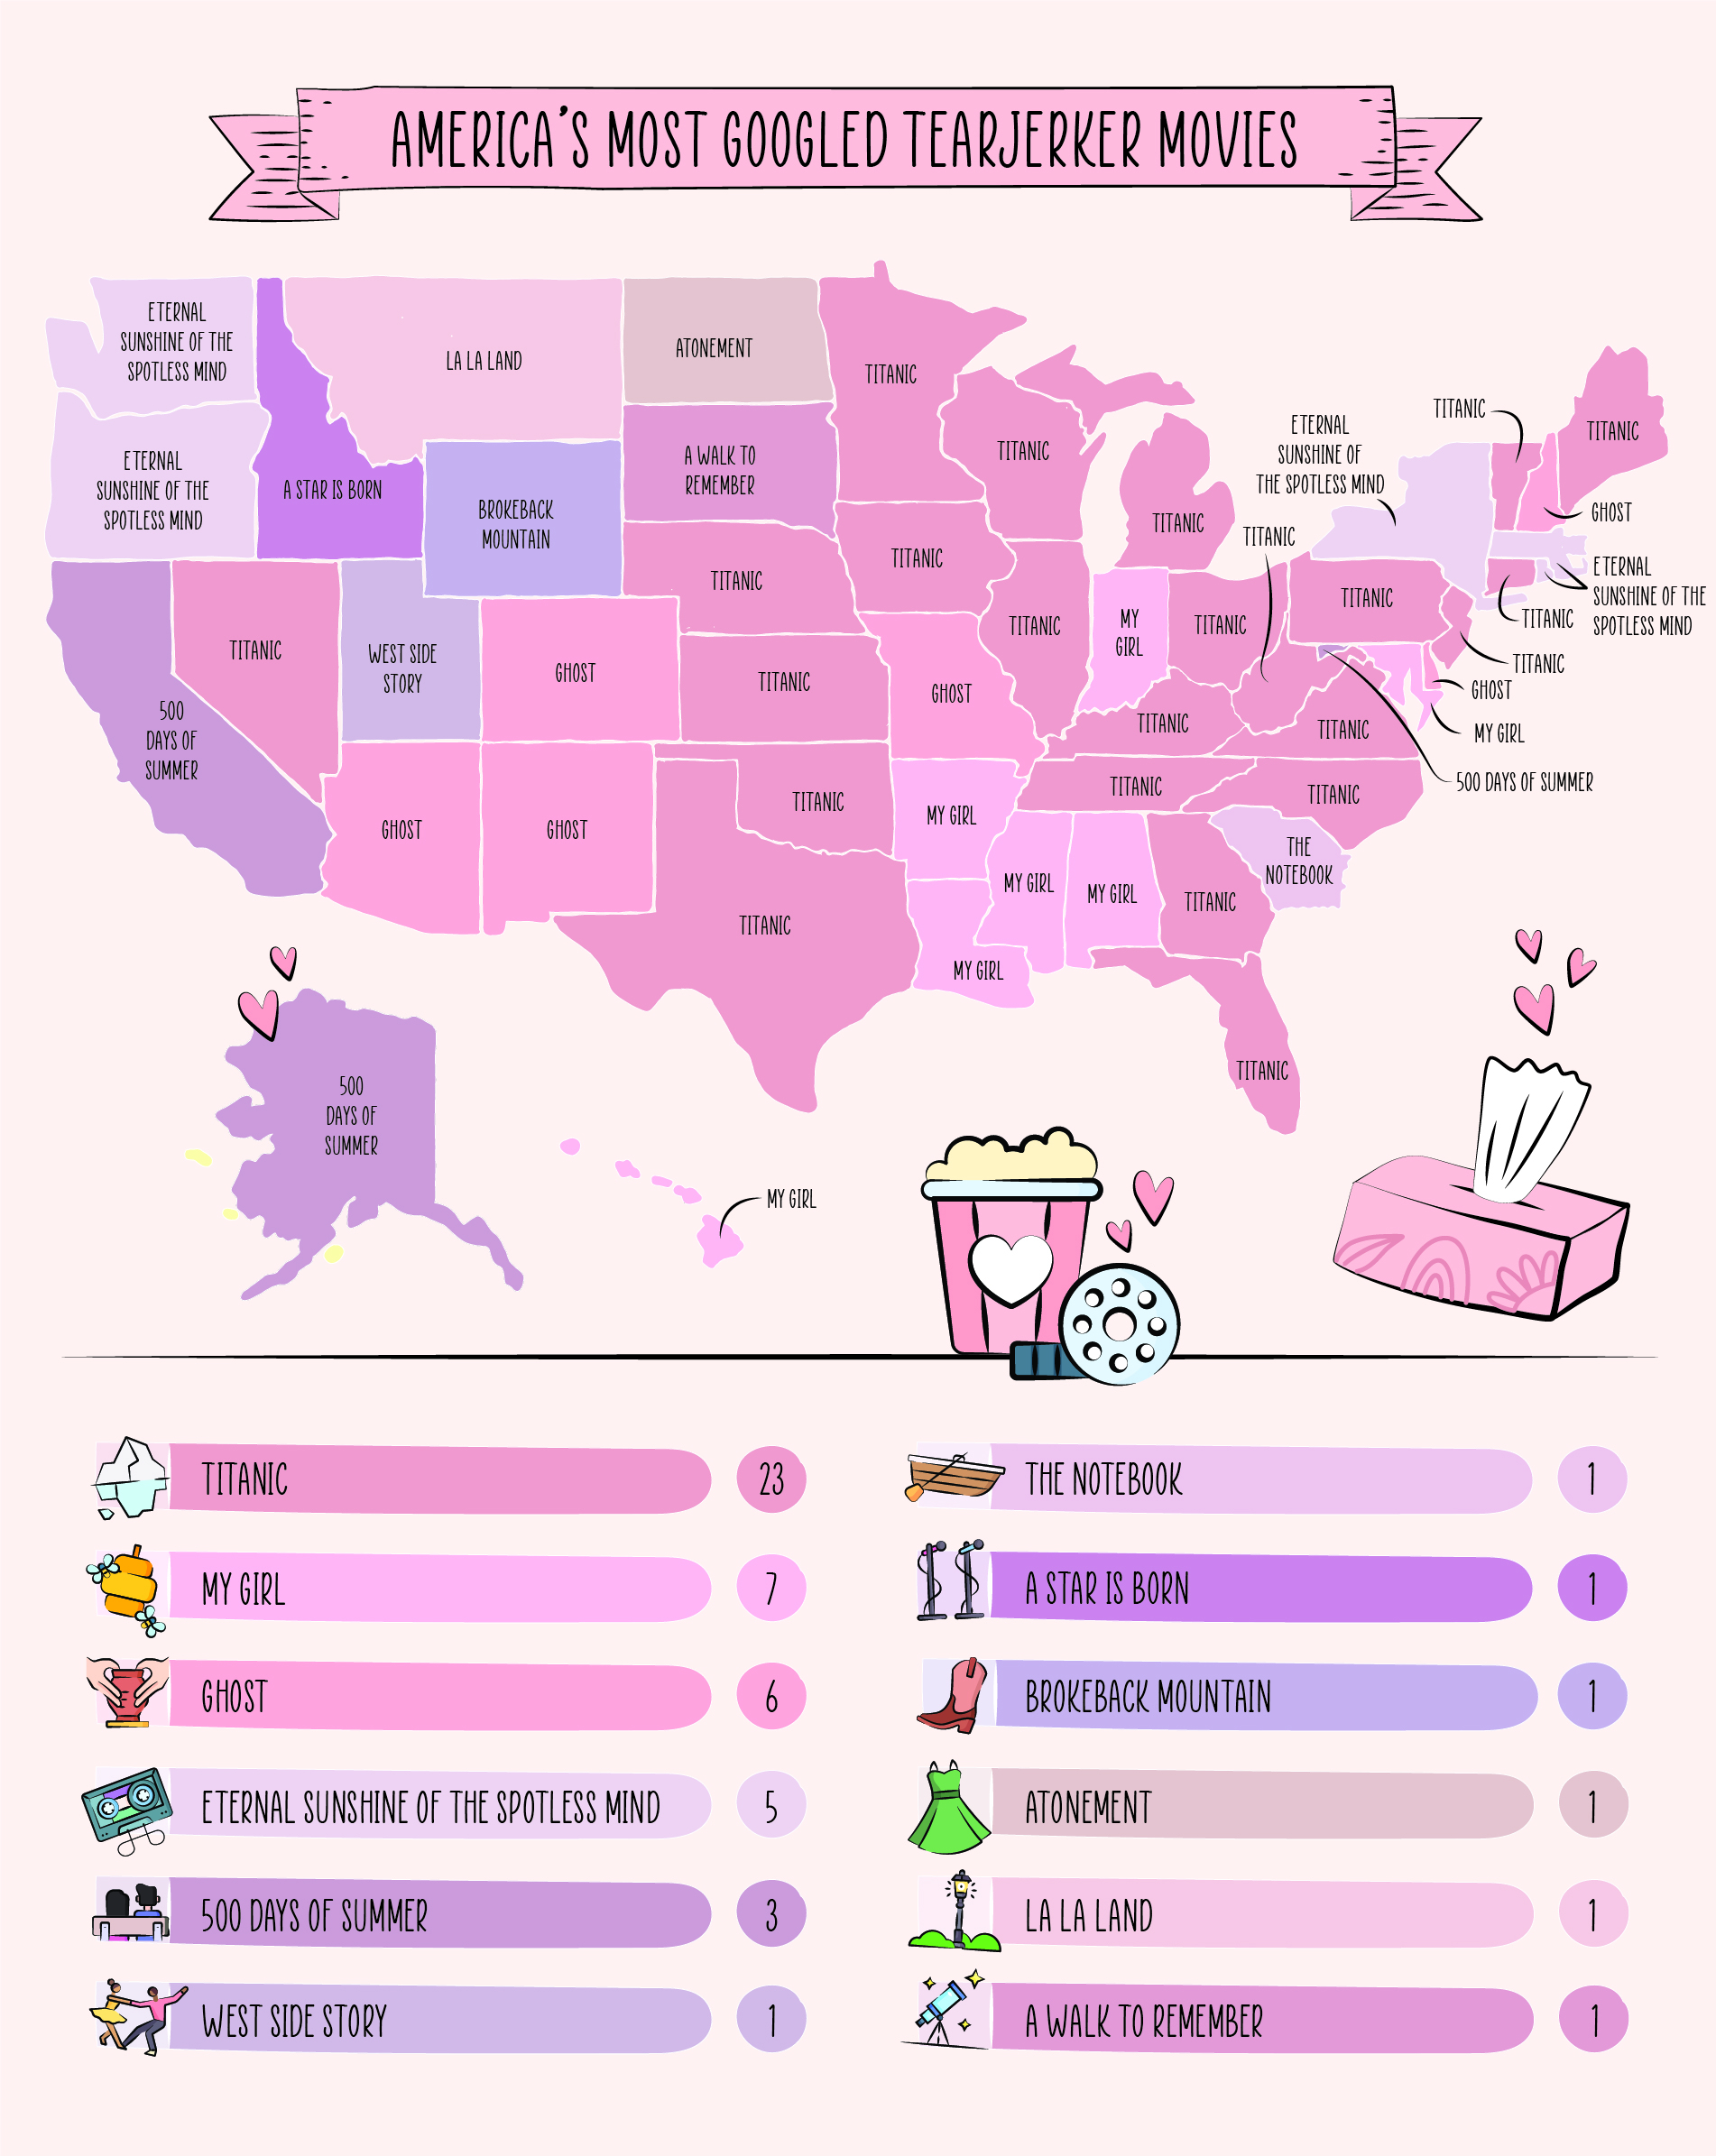 America's most googled tearjerker movies map